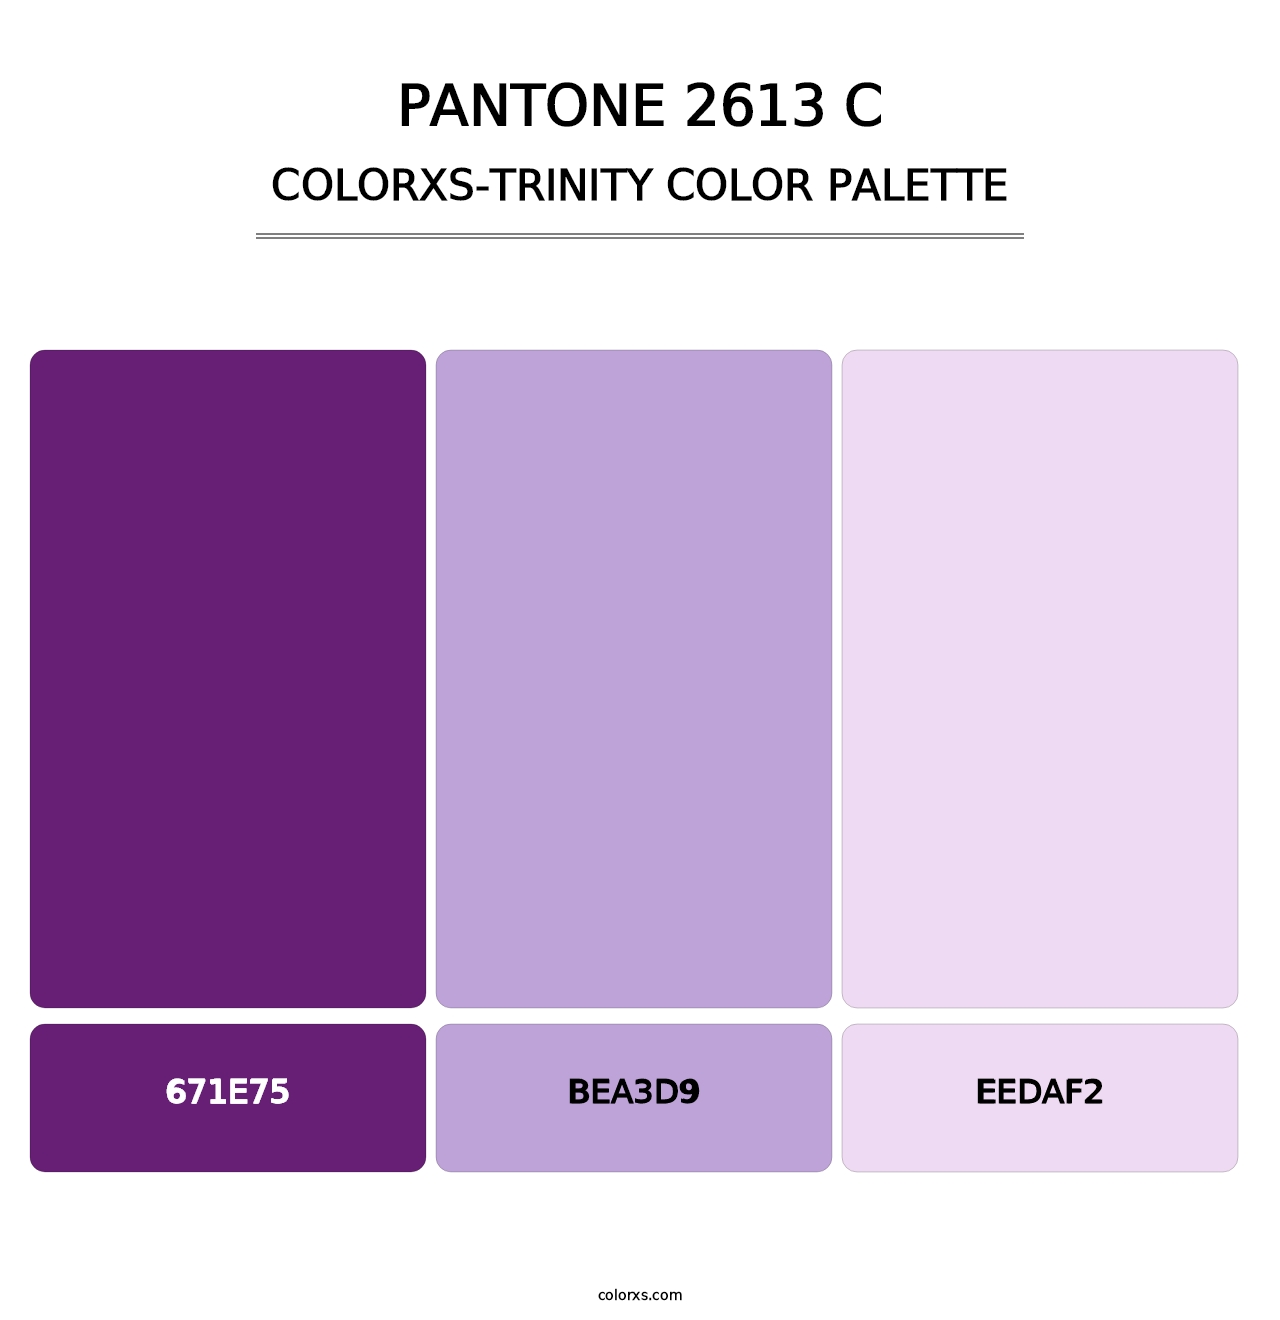 PANTONE 2613 C - Colorxs Trinity Palette